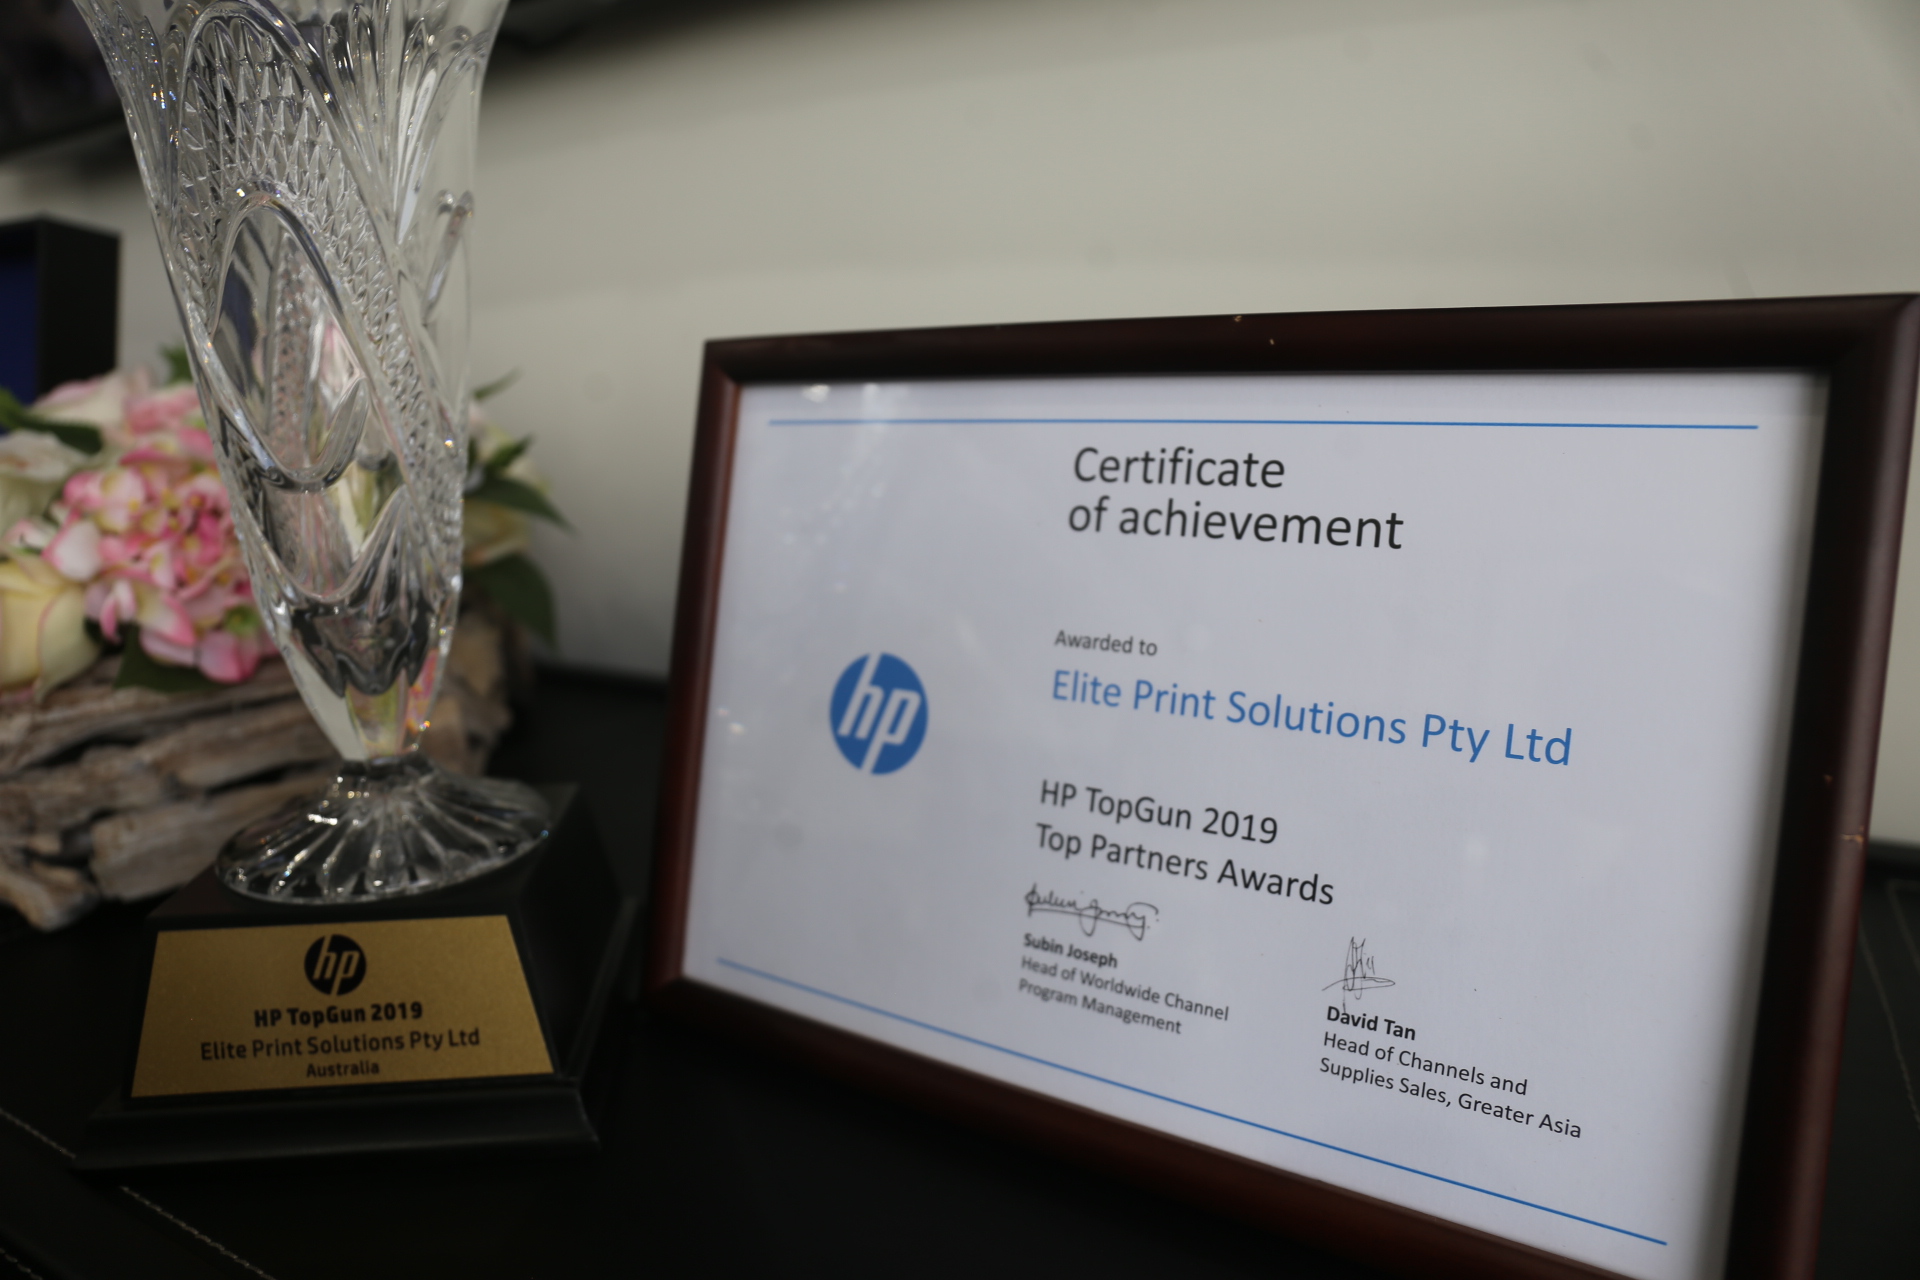 Our awards have finally come! HP TopGun 2019